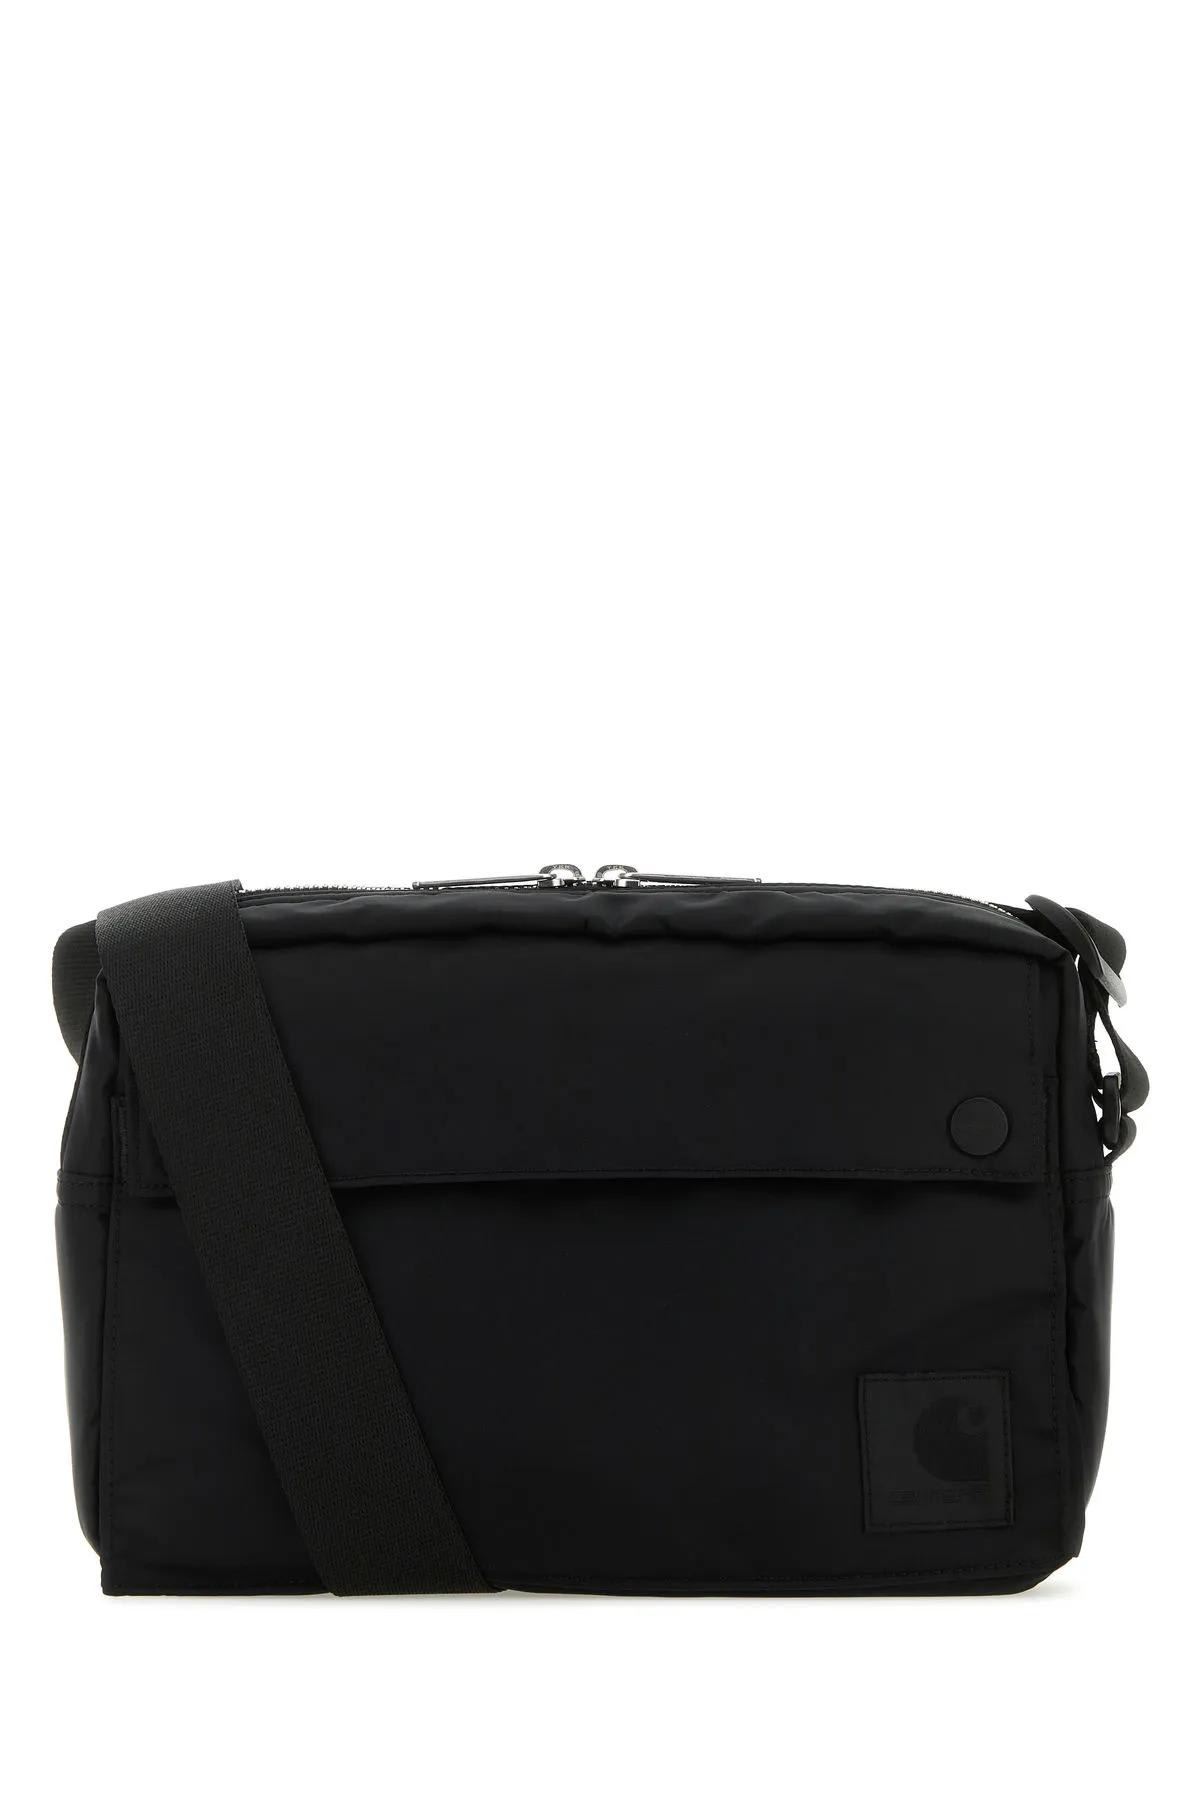 Carhartt Wip Handbags. In Black